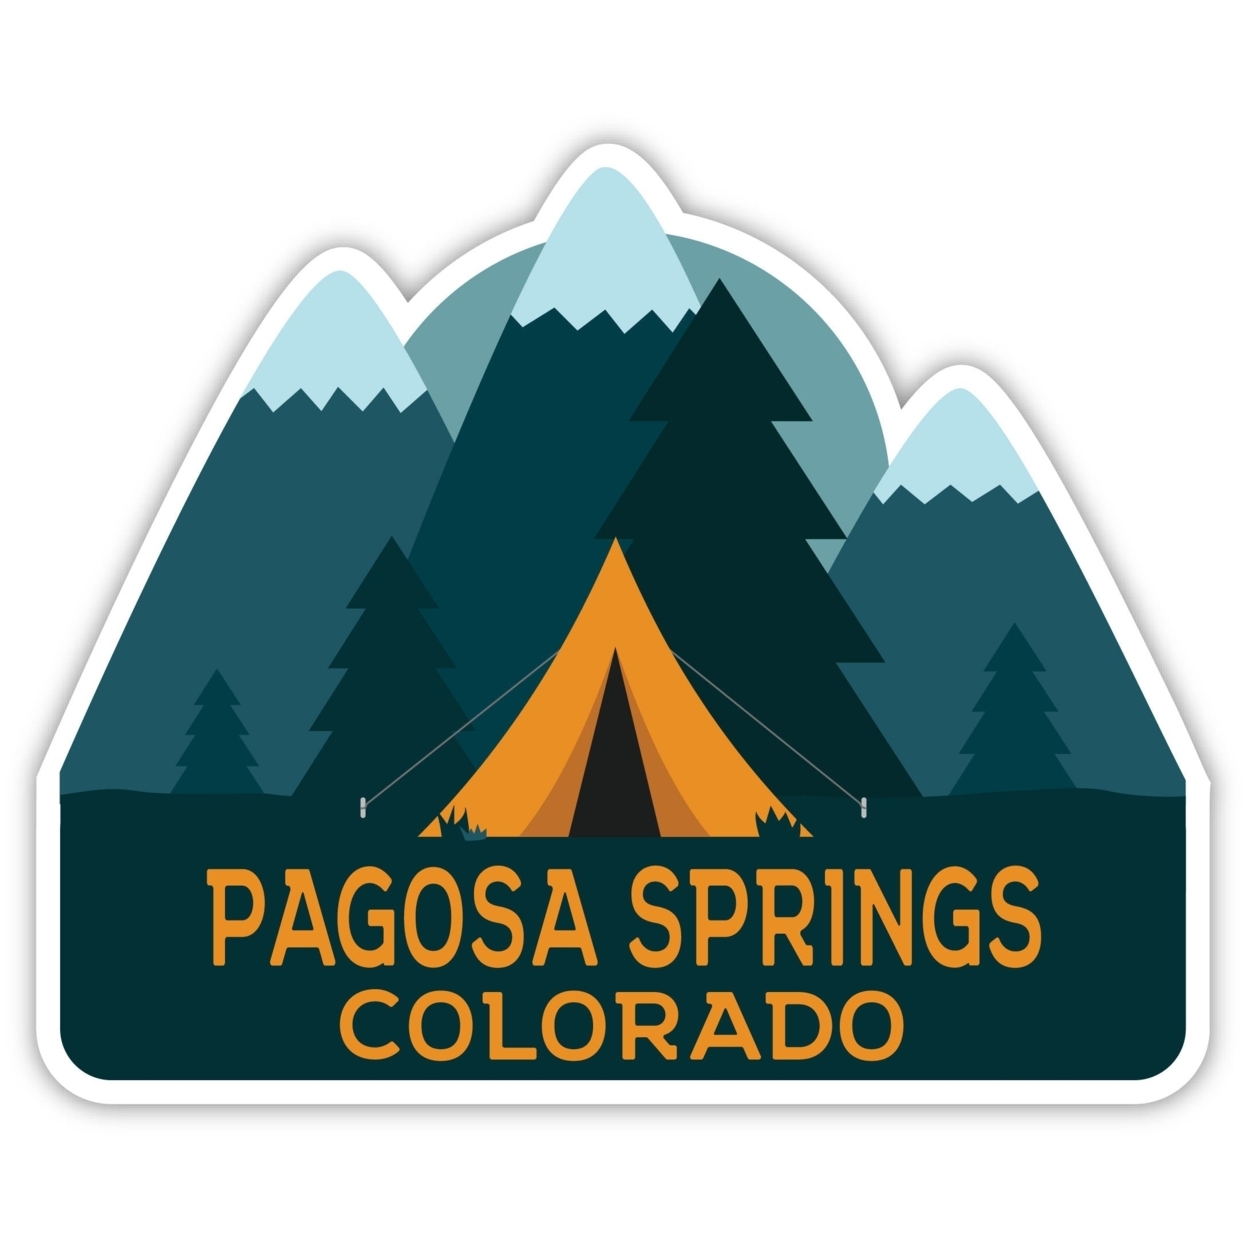 Pagosa Springs Colorado Souvenir Decorative Stickers (Choose Theme And Size) - Single Unit, 2-Inch, Camp Life